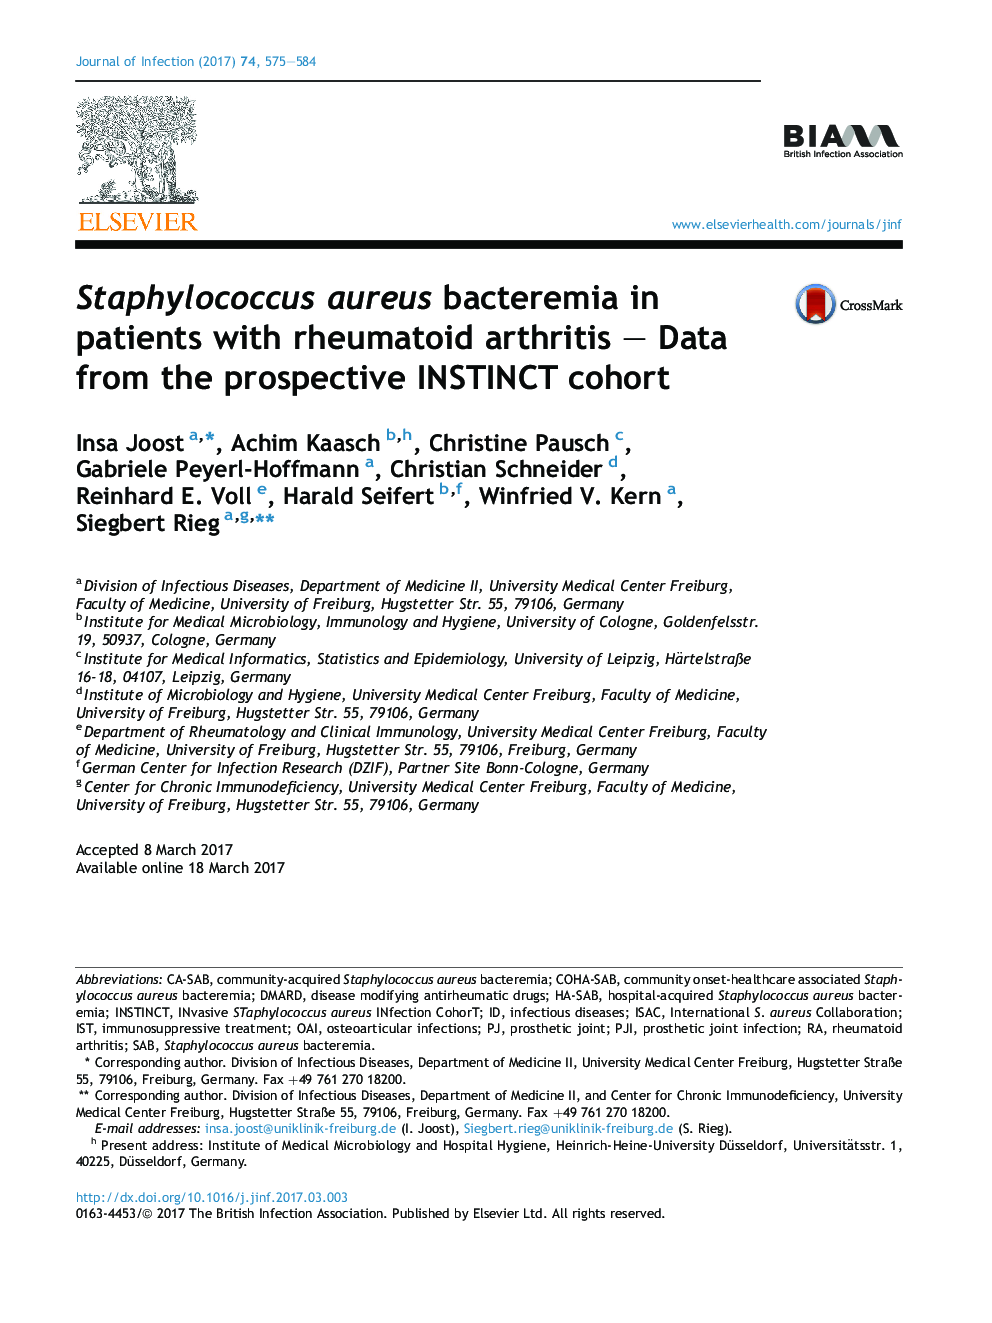 Staphylococcus aureus bacteremia in patients with rheumatoid arthritis - Data from the prospective INSTINCT cohort